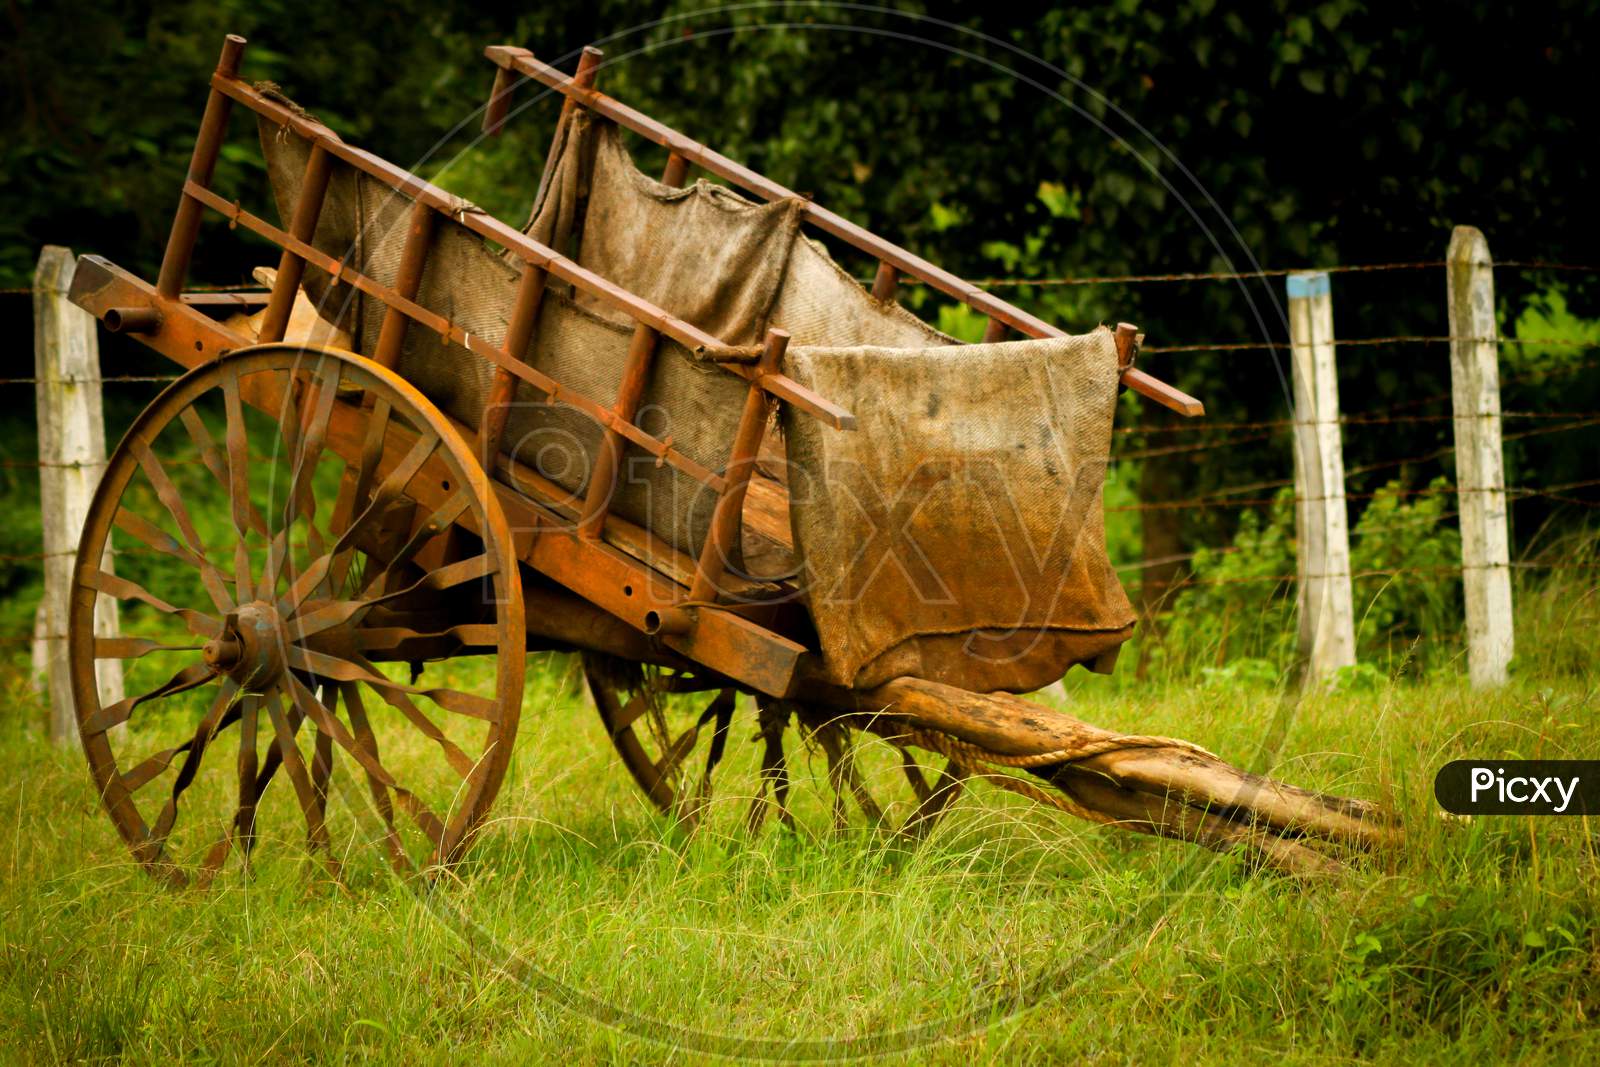 bailgadi - old farm cart with gunny sacks parked in a farm